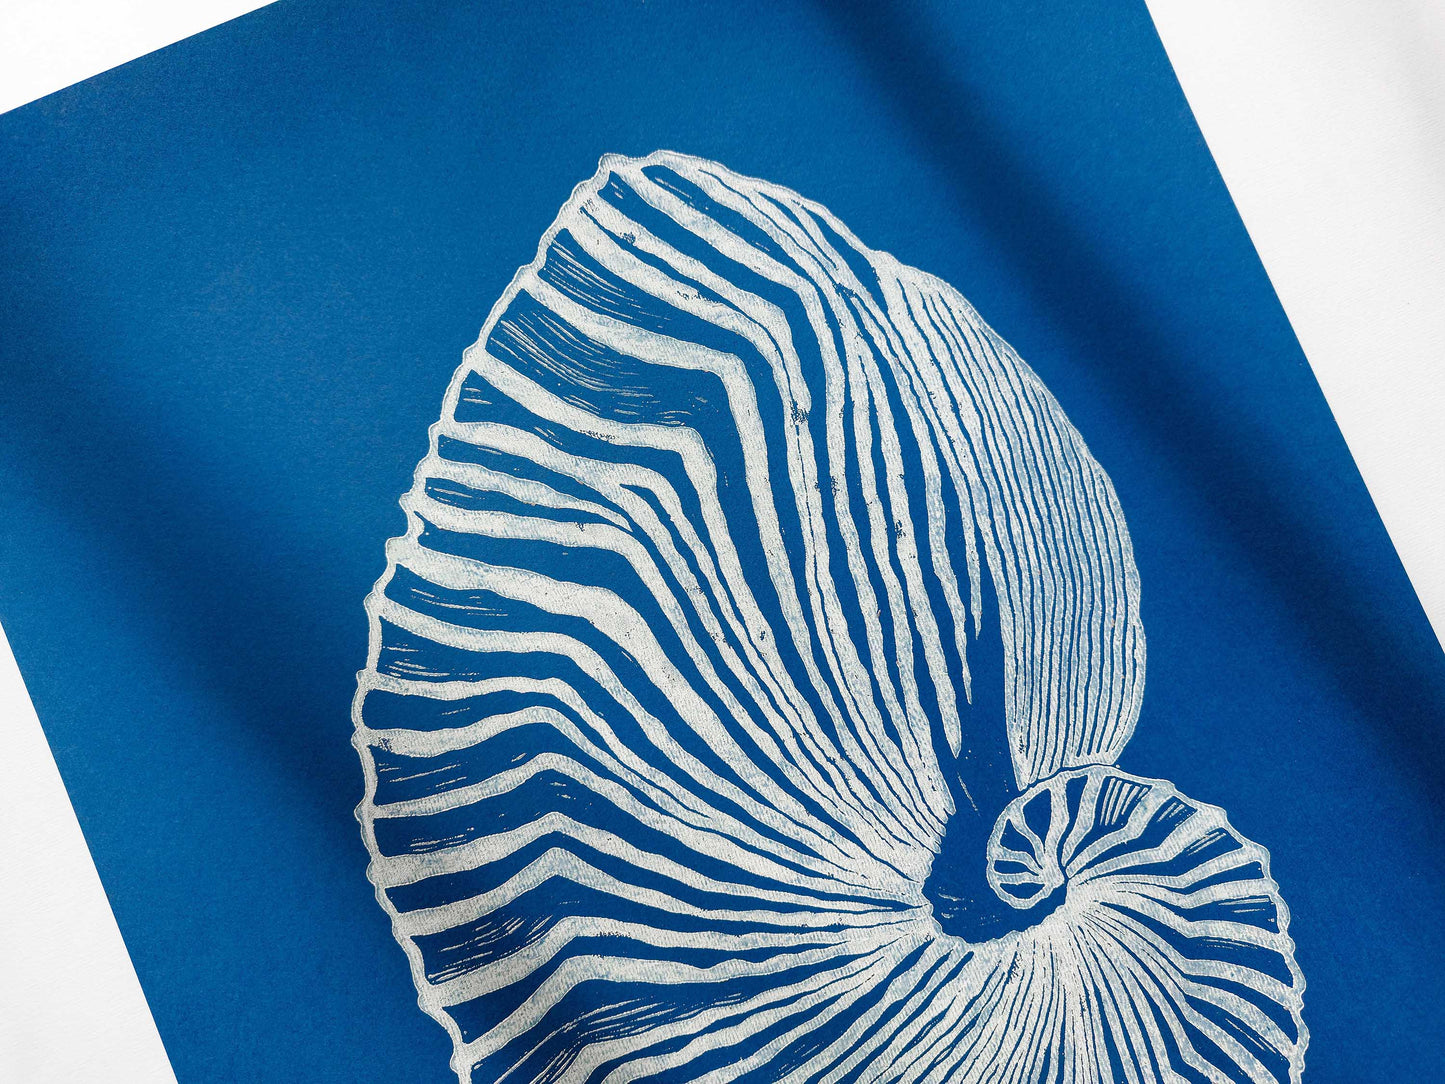 Blue and white sea shell art Linocut print / printmaking / original artwork / lino print / linogravure / relief print / block print